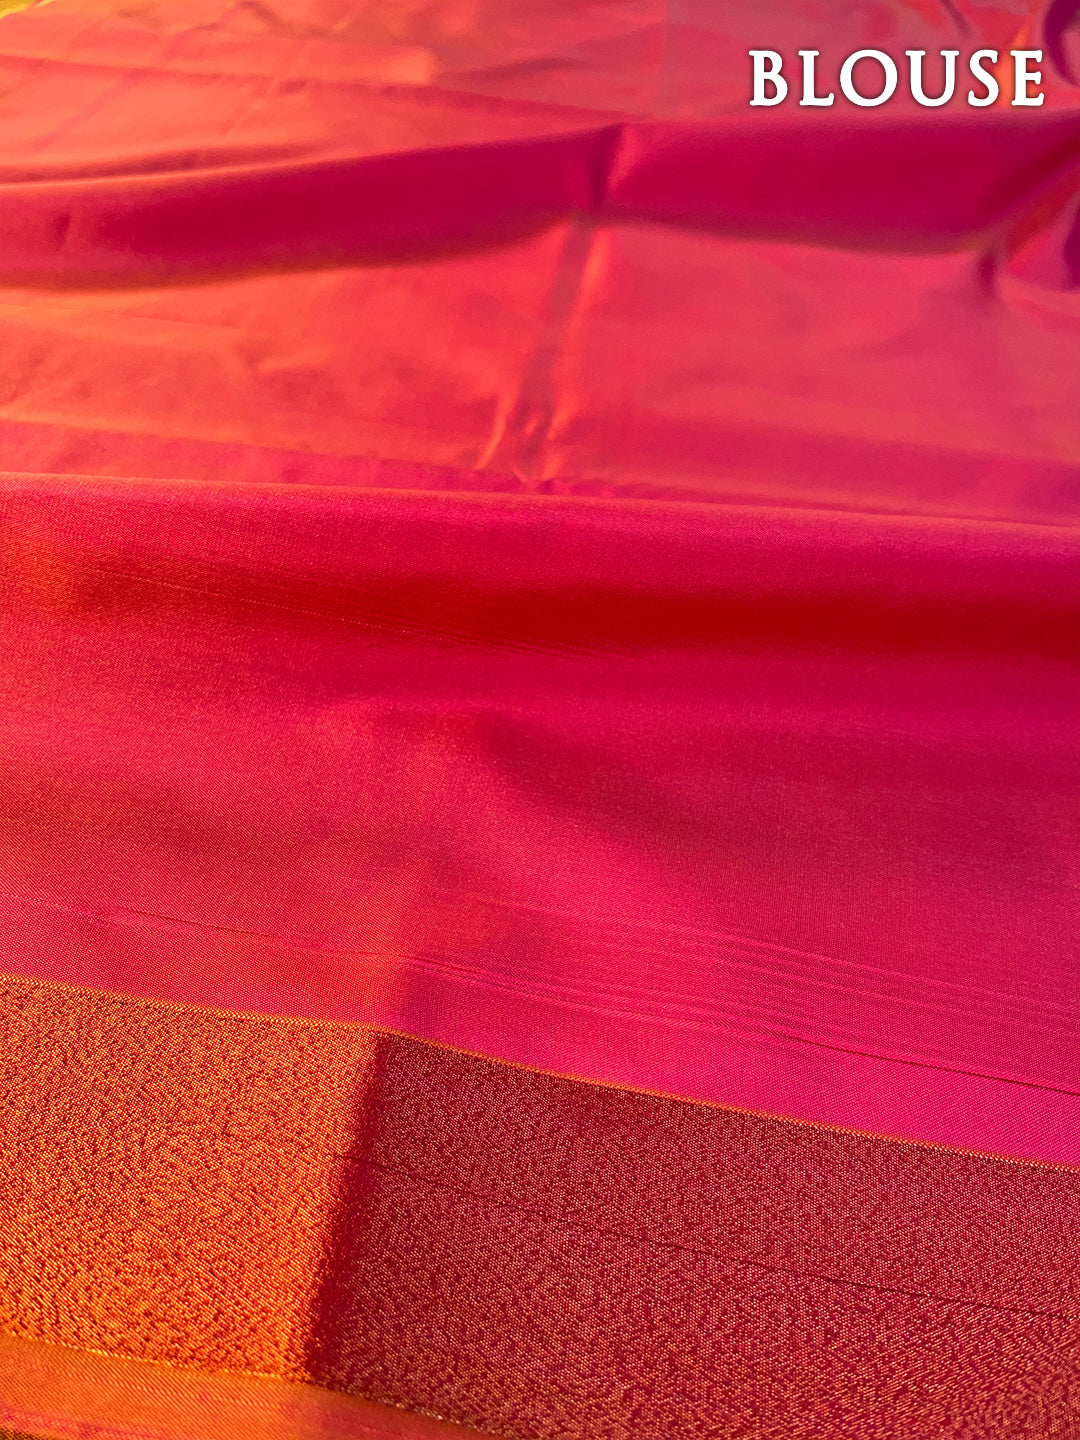 Dual color of mustard yellow and pink kanchipuram semi soft silk saree